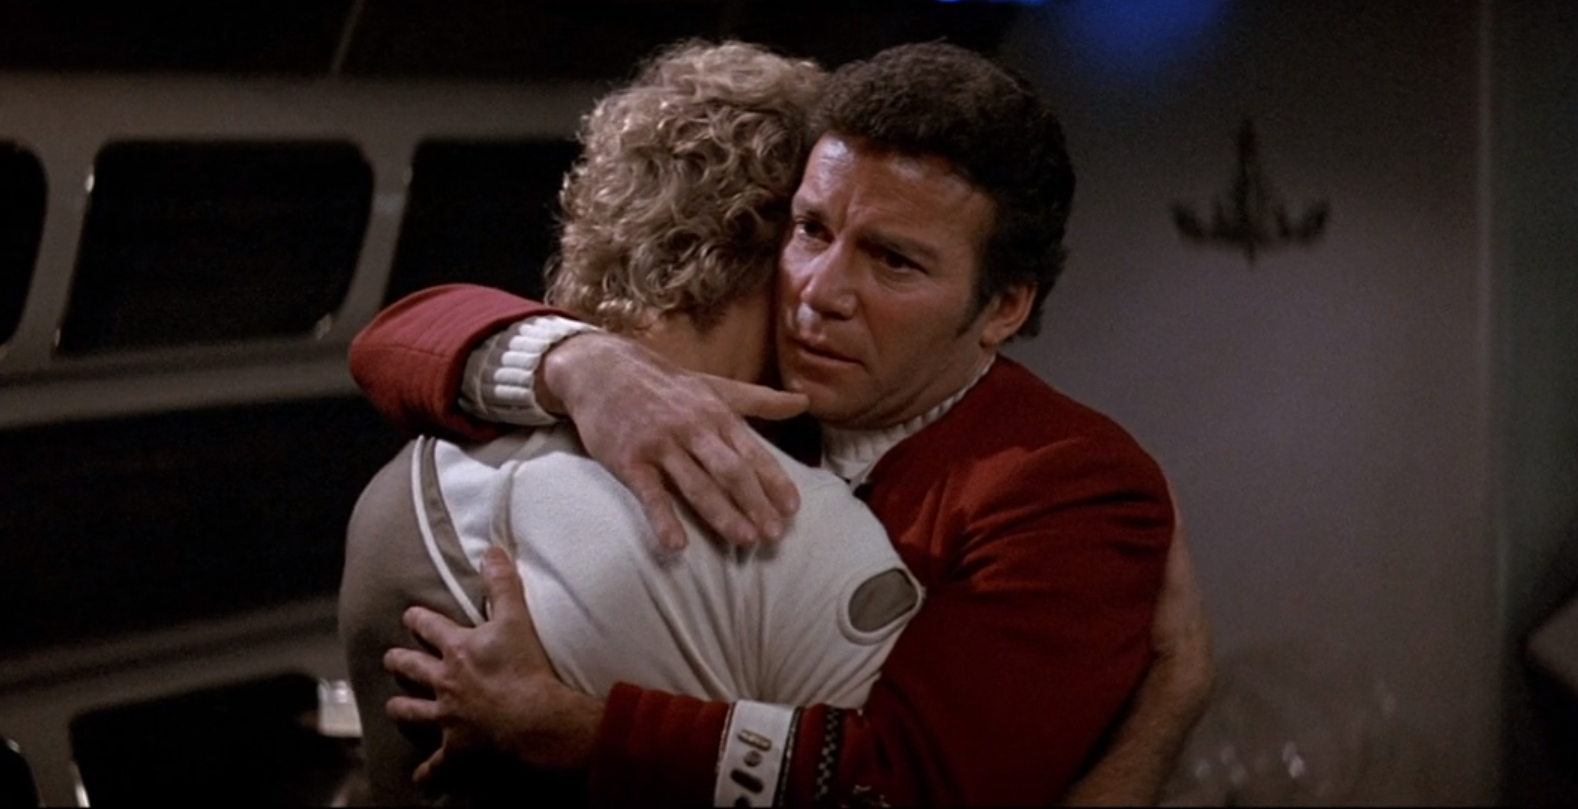 Kirk mit seinem Sohn David in "Wrath of Khan" (Bild: ViacomCBS)